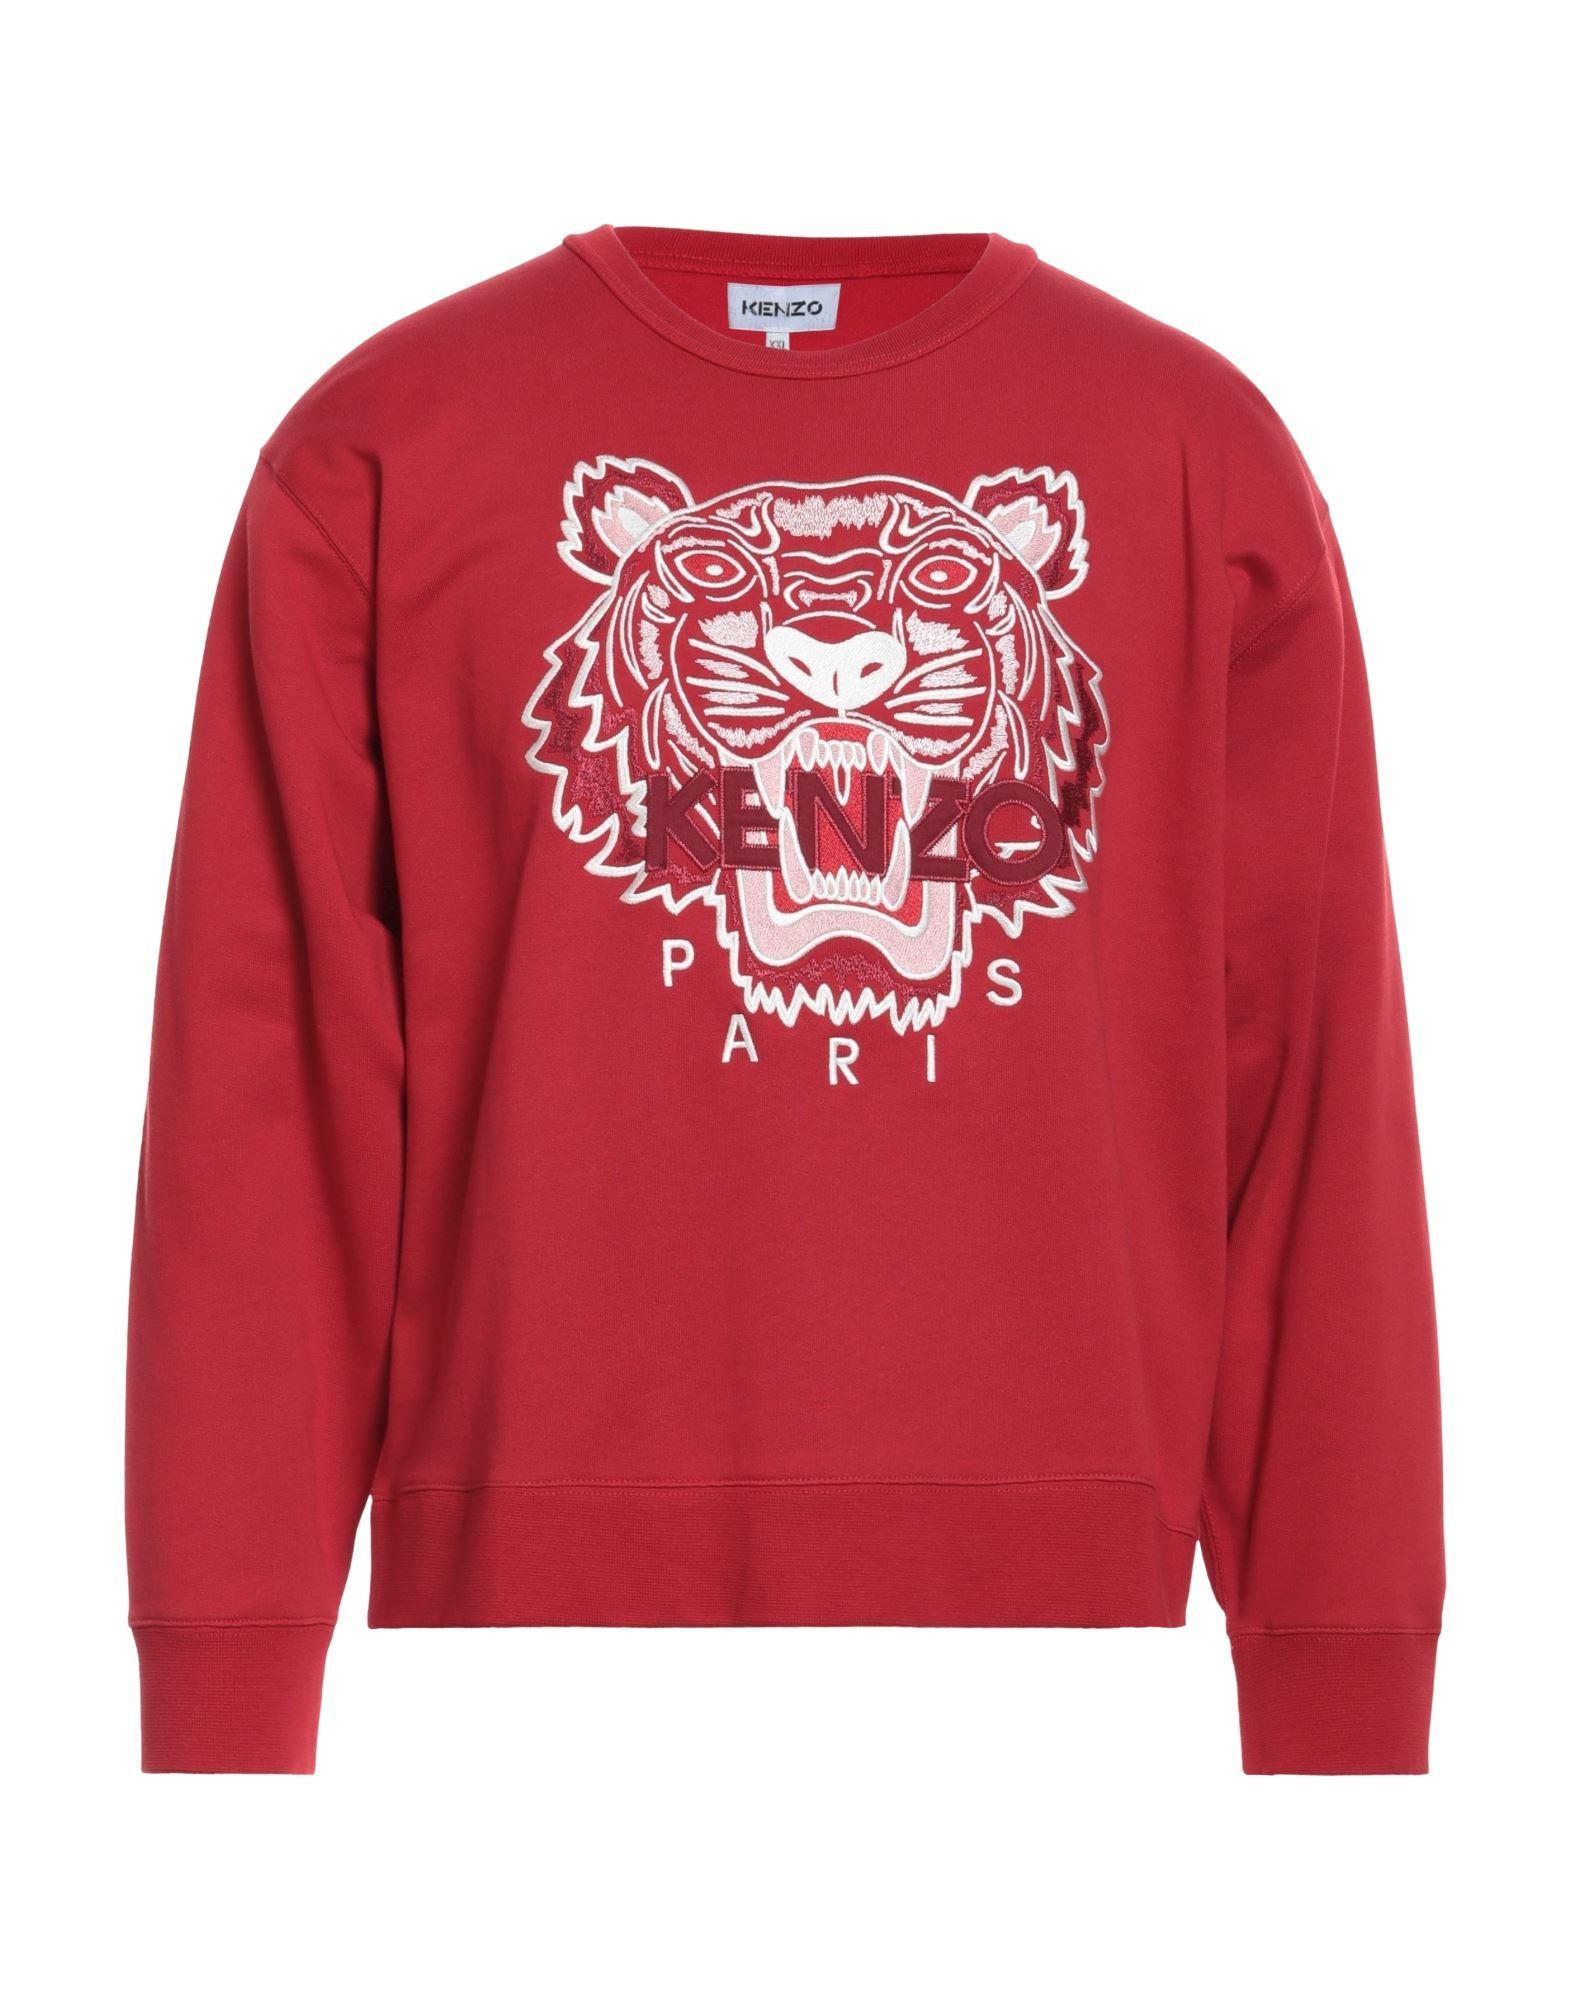 KENZO Sweatshirt in Red for Men | Lyst